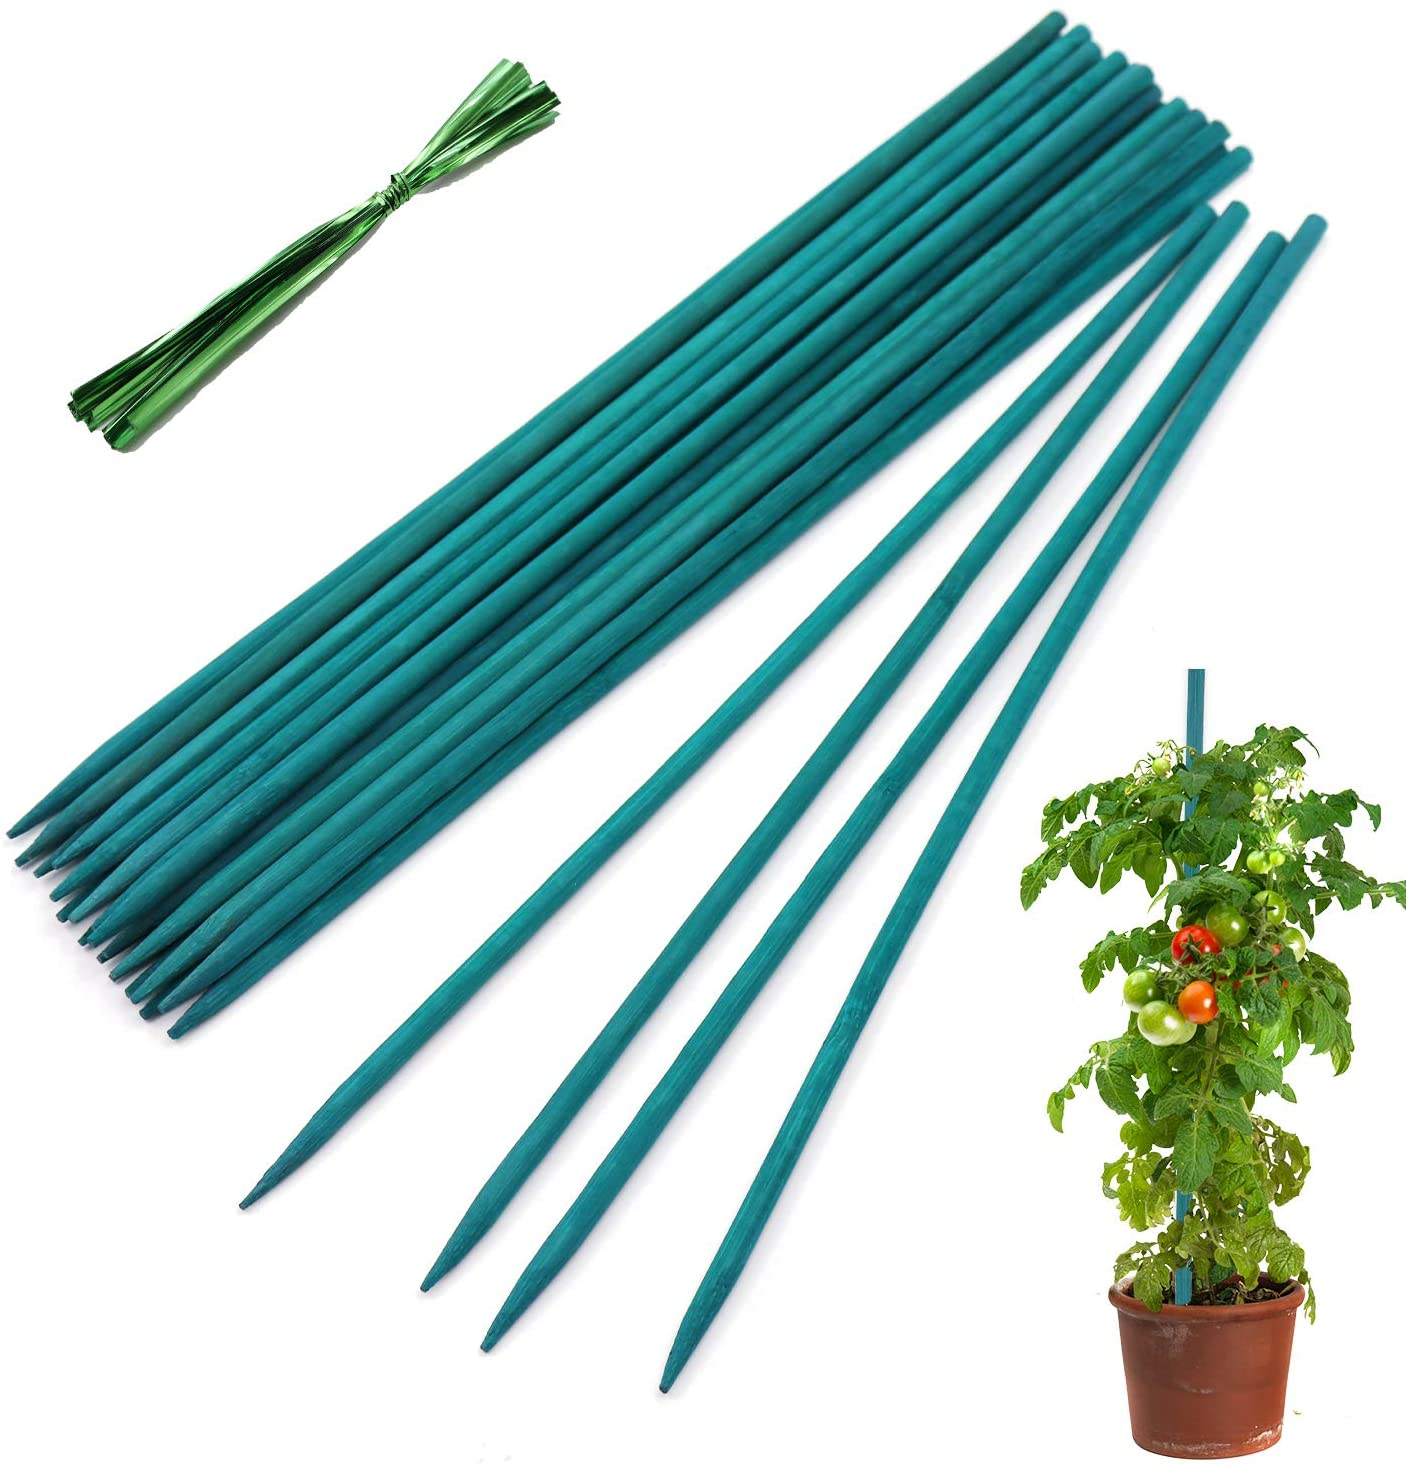 Bamboo flower sticks